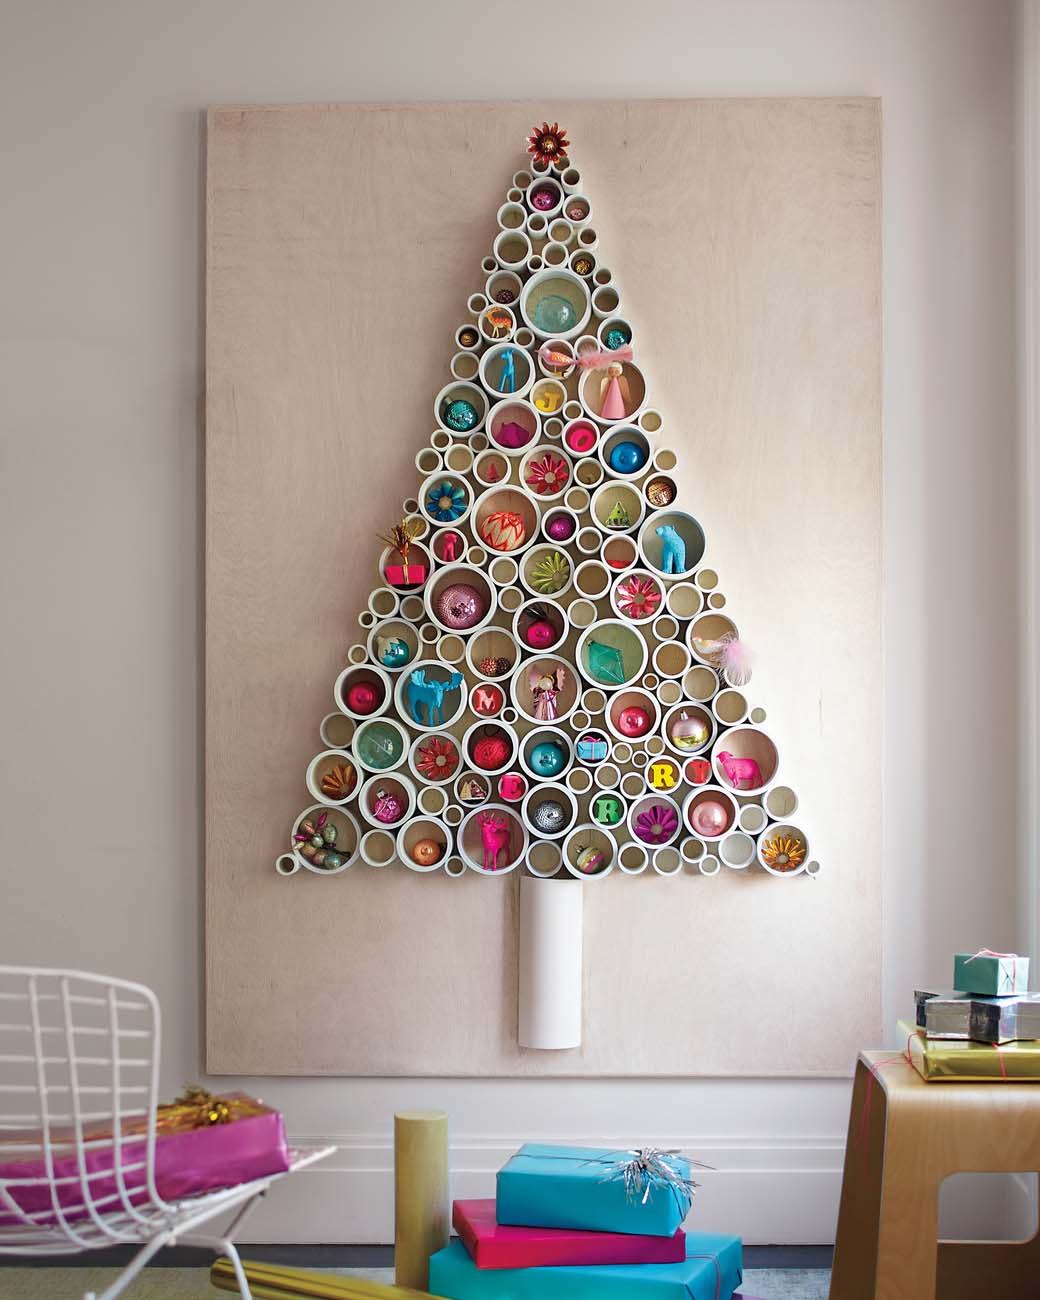 DIY PVC-Pipe Christmas Tree dwellingdecor